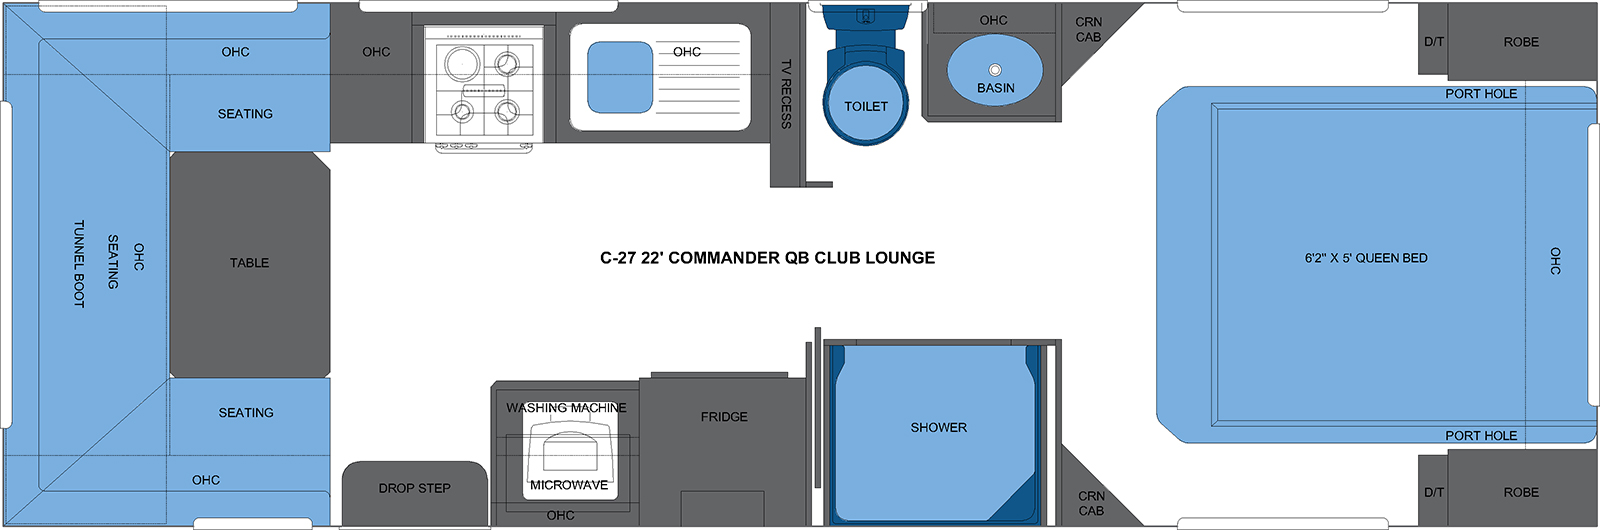 C-27 22' COMMANDER QB CLUB LOUNGE CARAVAN